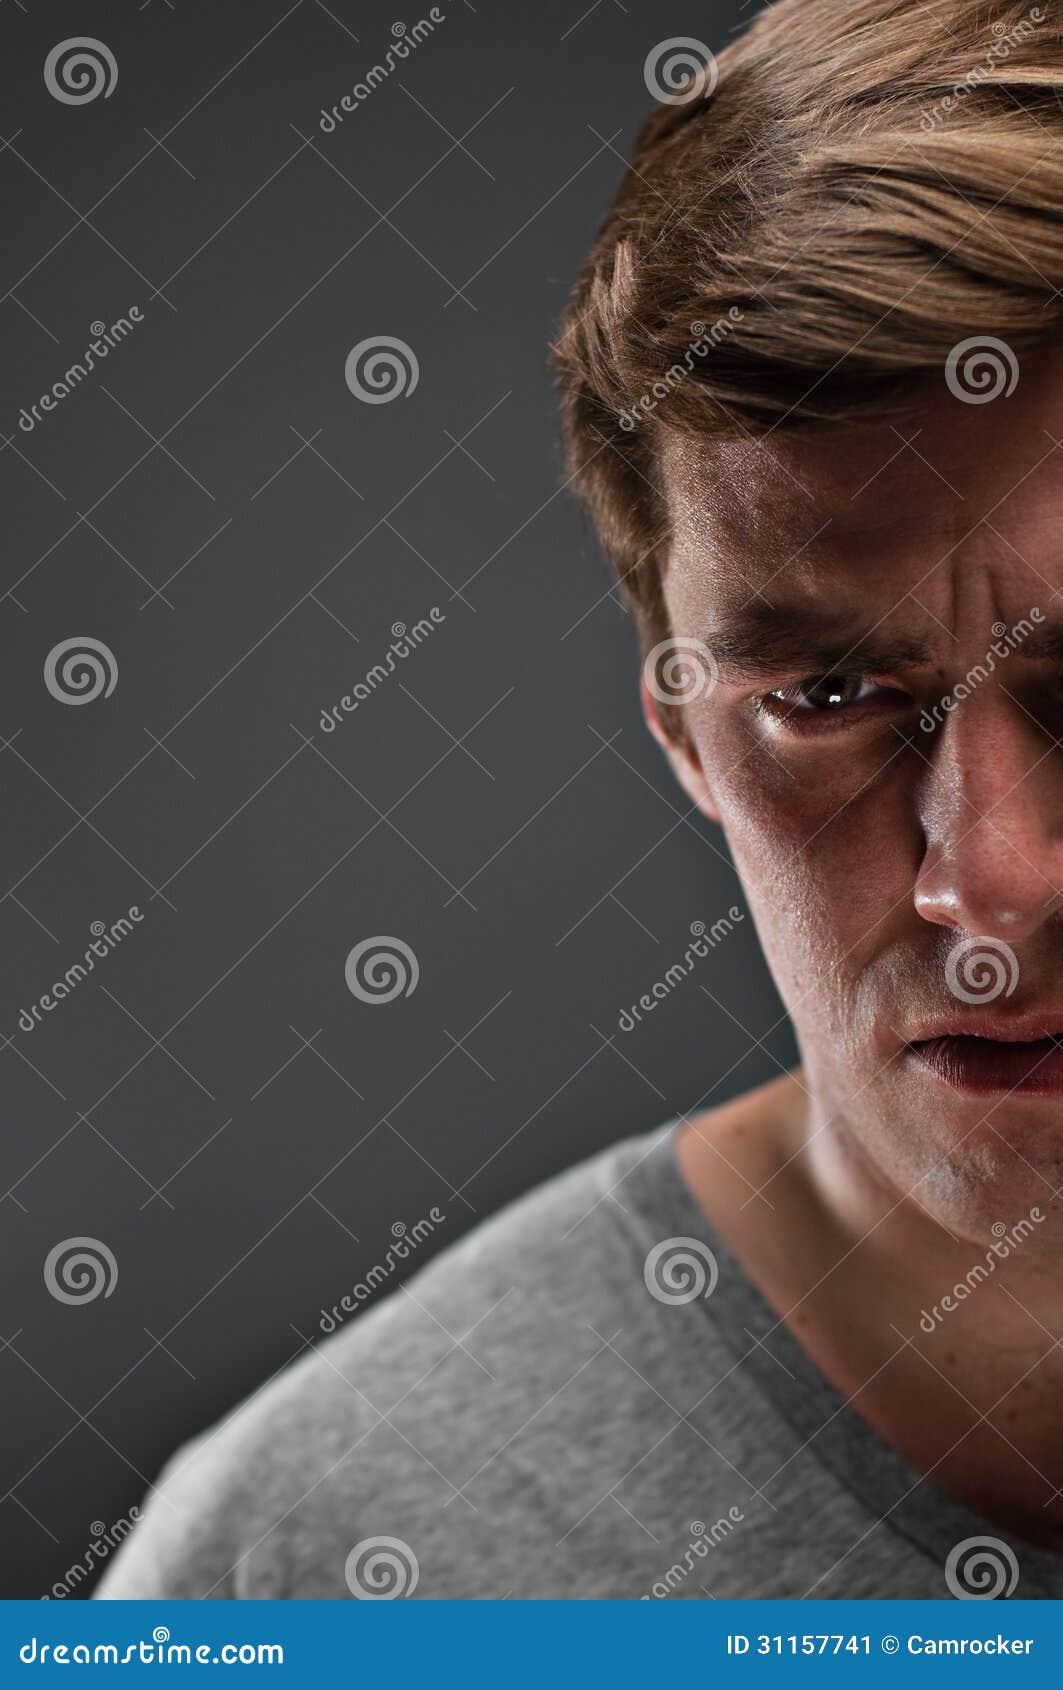 Caucasian Man Half Face Depression Portrtait Stock Image - Image: 31157741